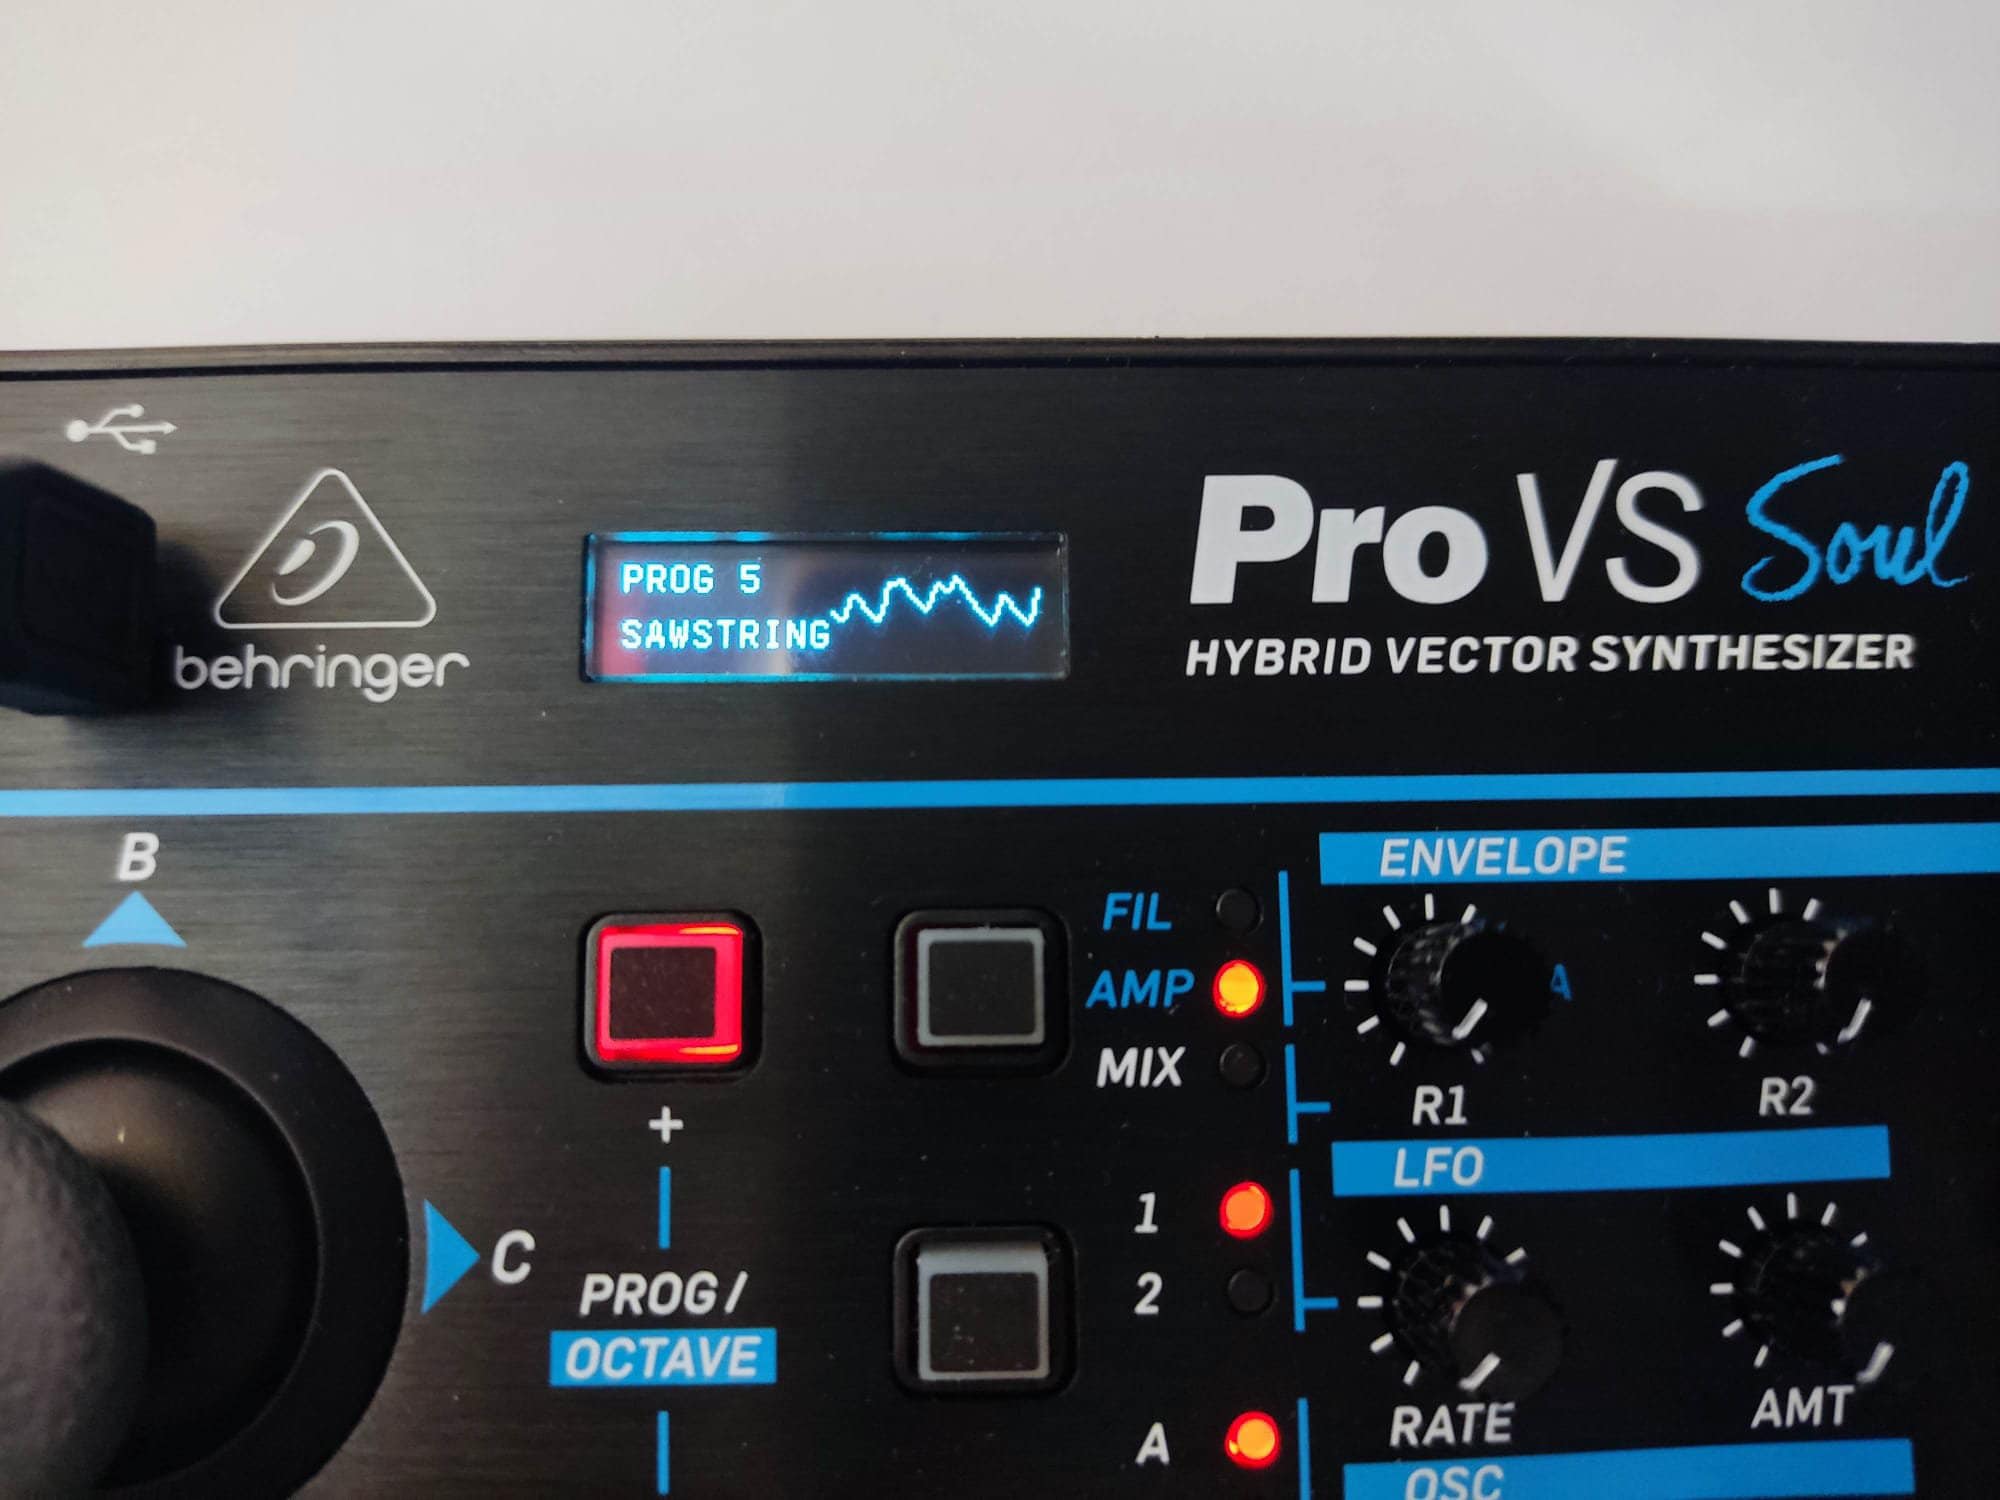 Behringer Announces Pro VS Soul Mini-Synth, JP-4000, and Saturn Soul |  Vintage Synth Explorer